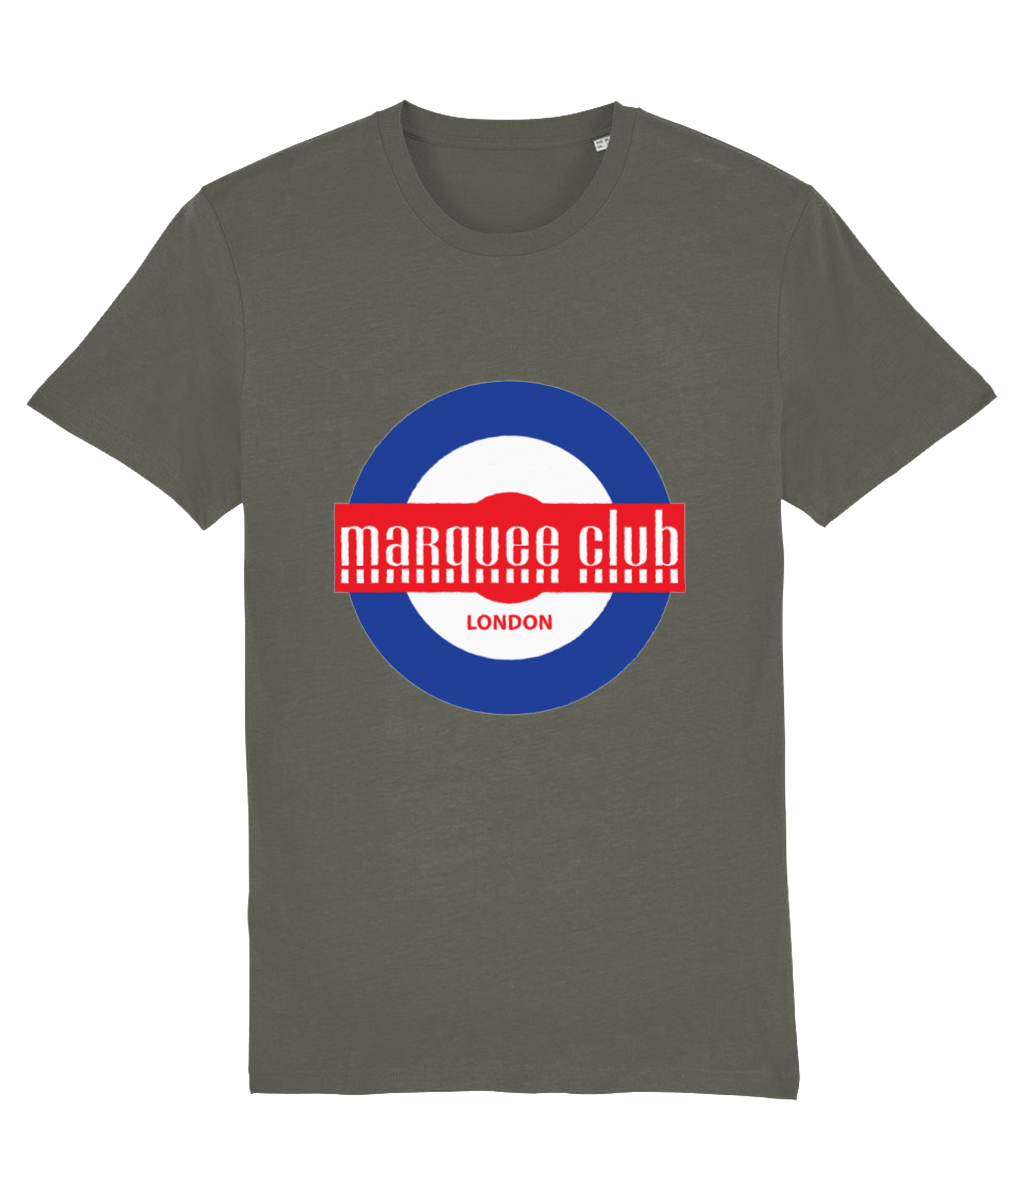 vintage marquee club london design Tシャツ